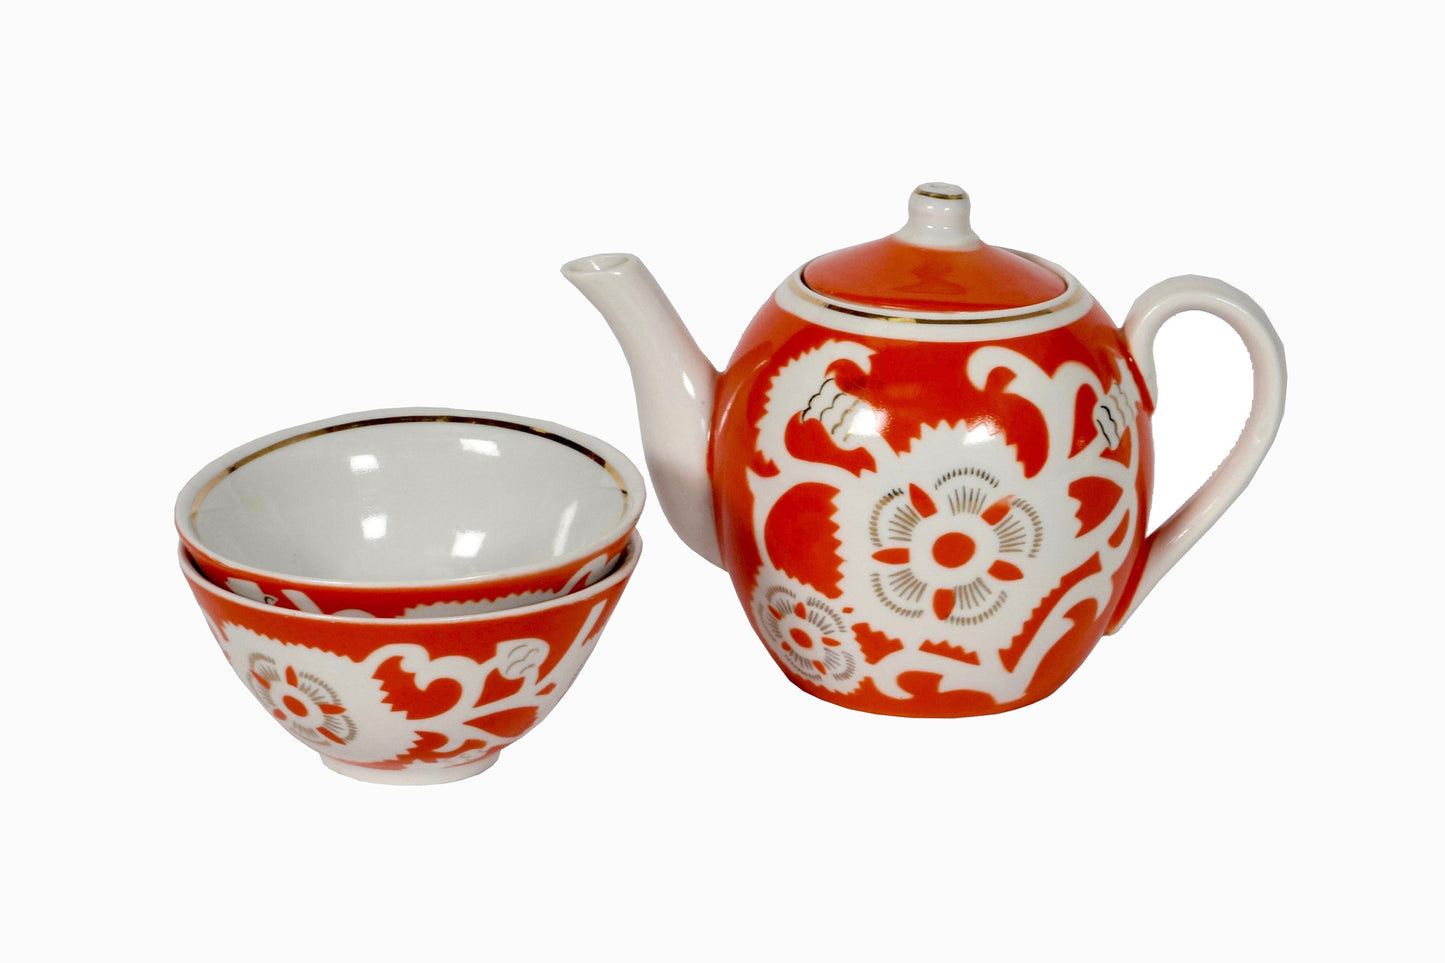 Uzbeki orange teapot with flower decoration